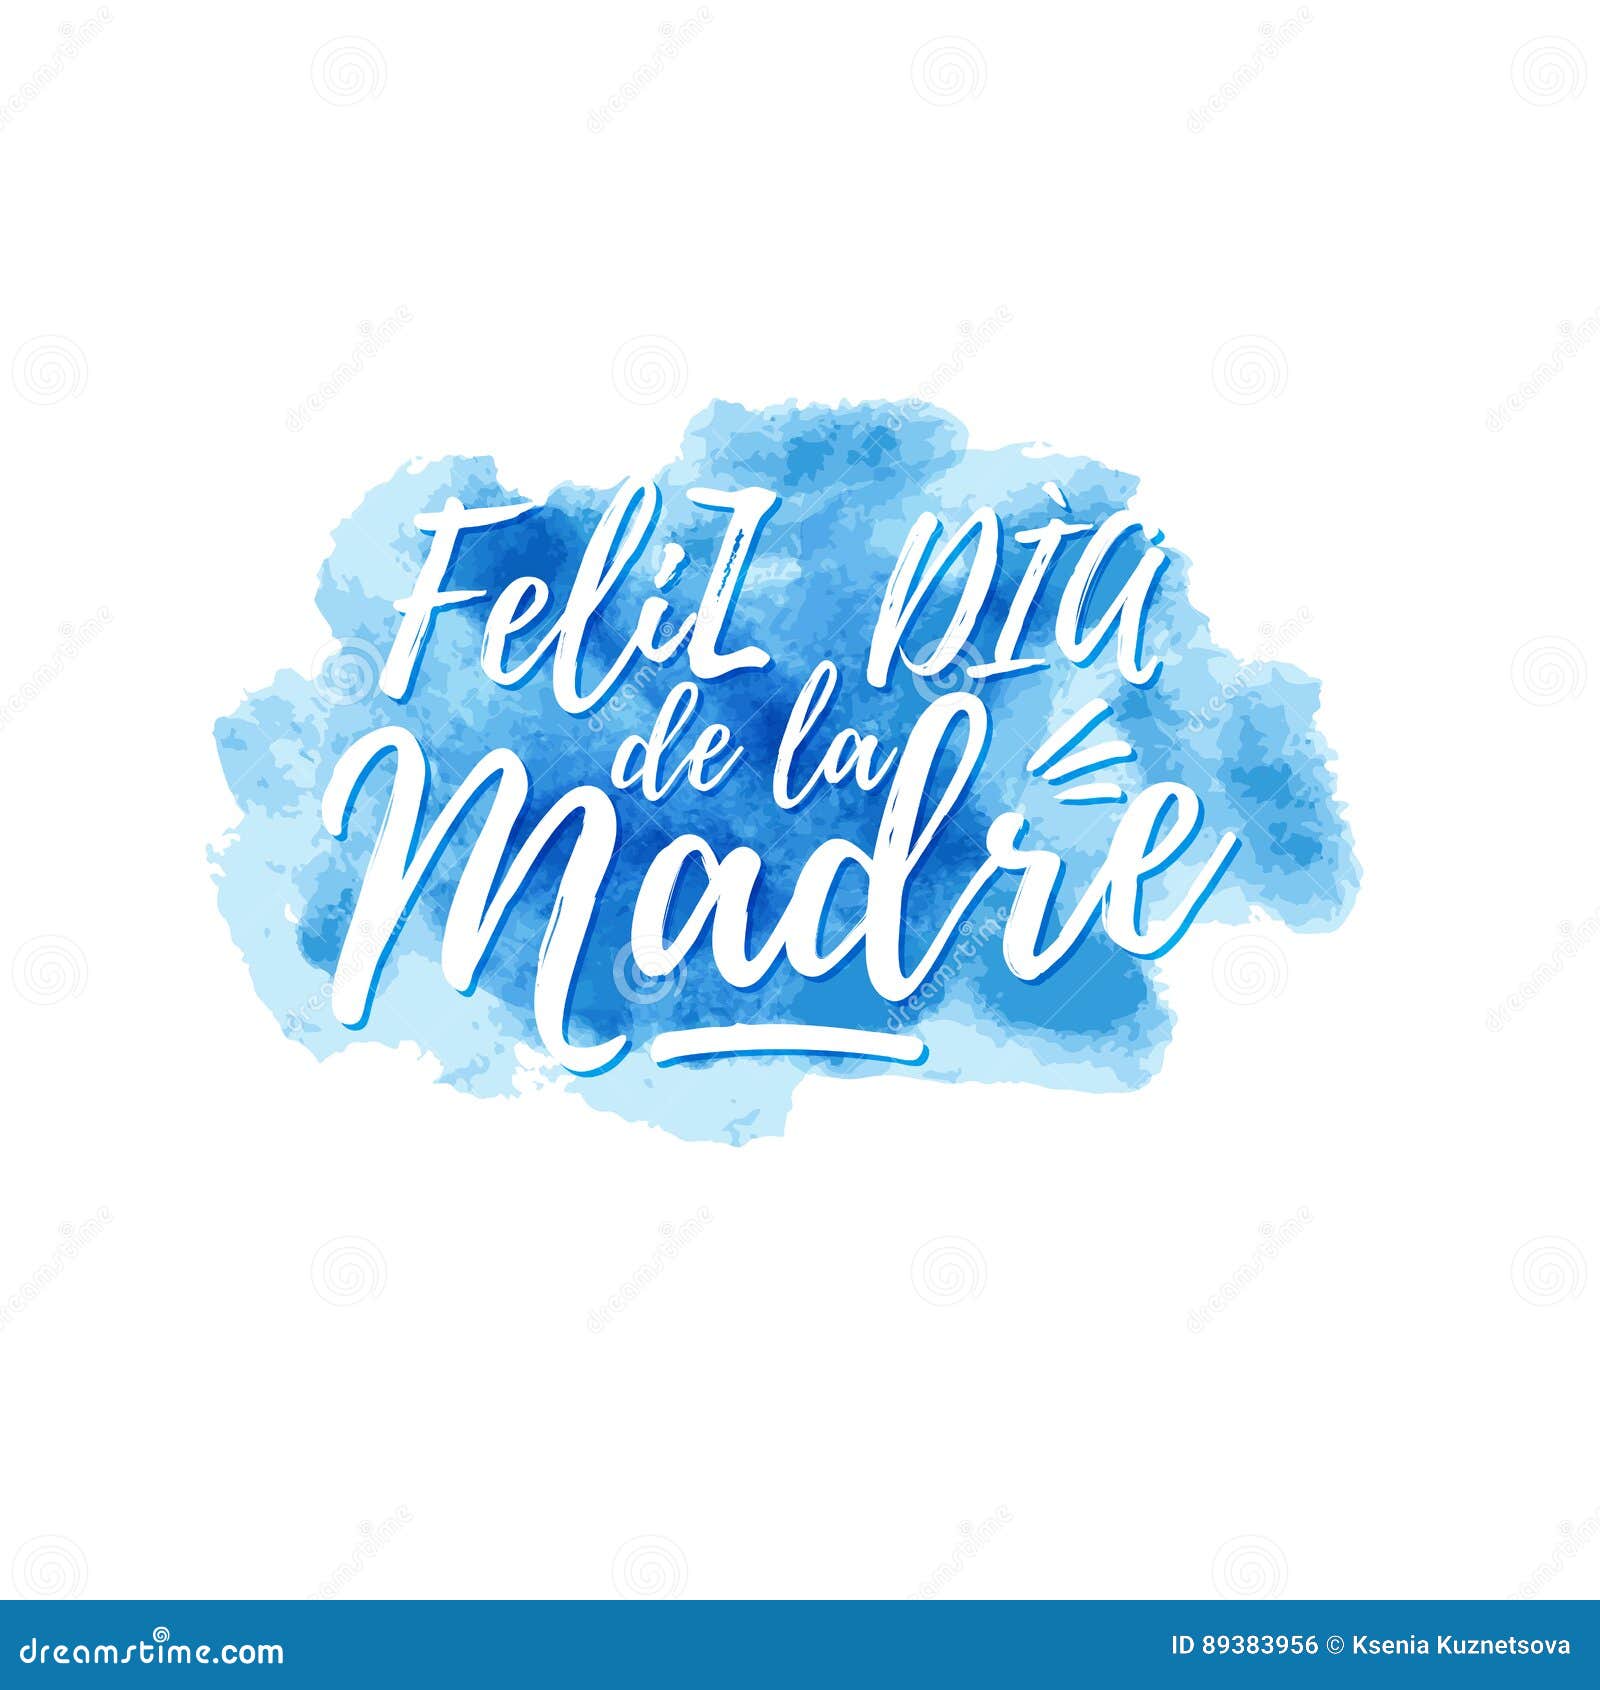 feliz dia de la madre, happy mother s day in spanish